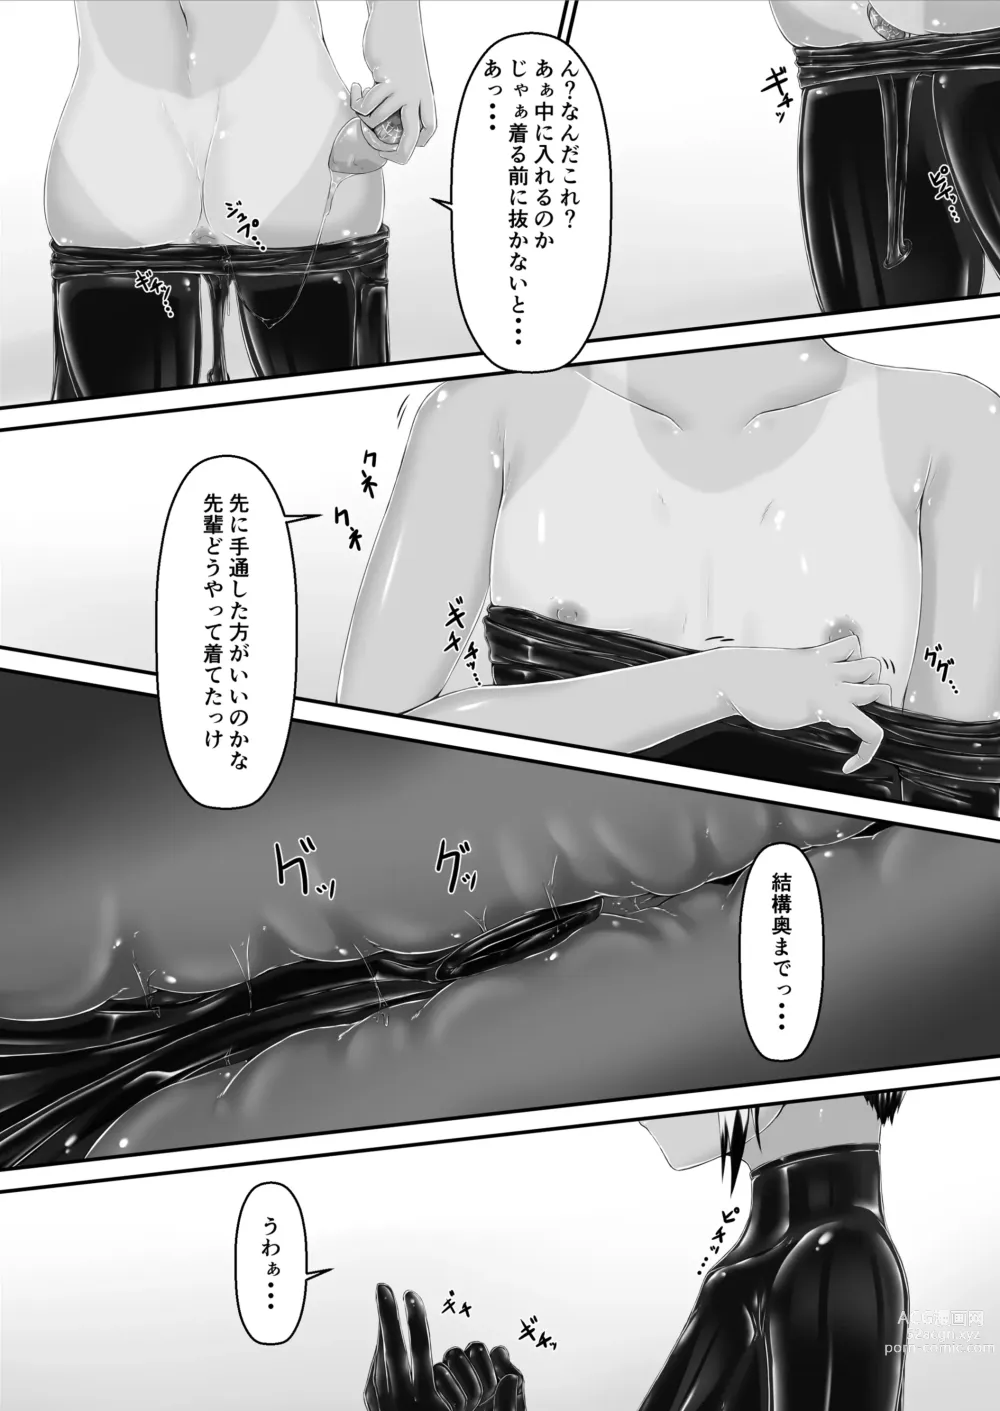 Page 24 of doujinshi Tora x Neko Choco Ice